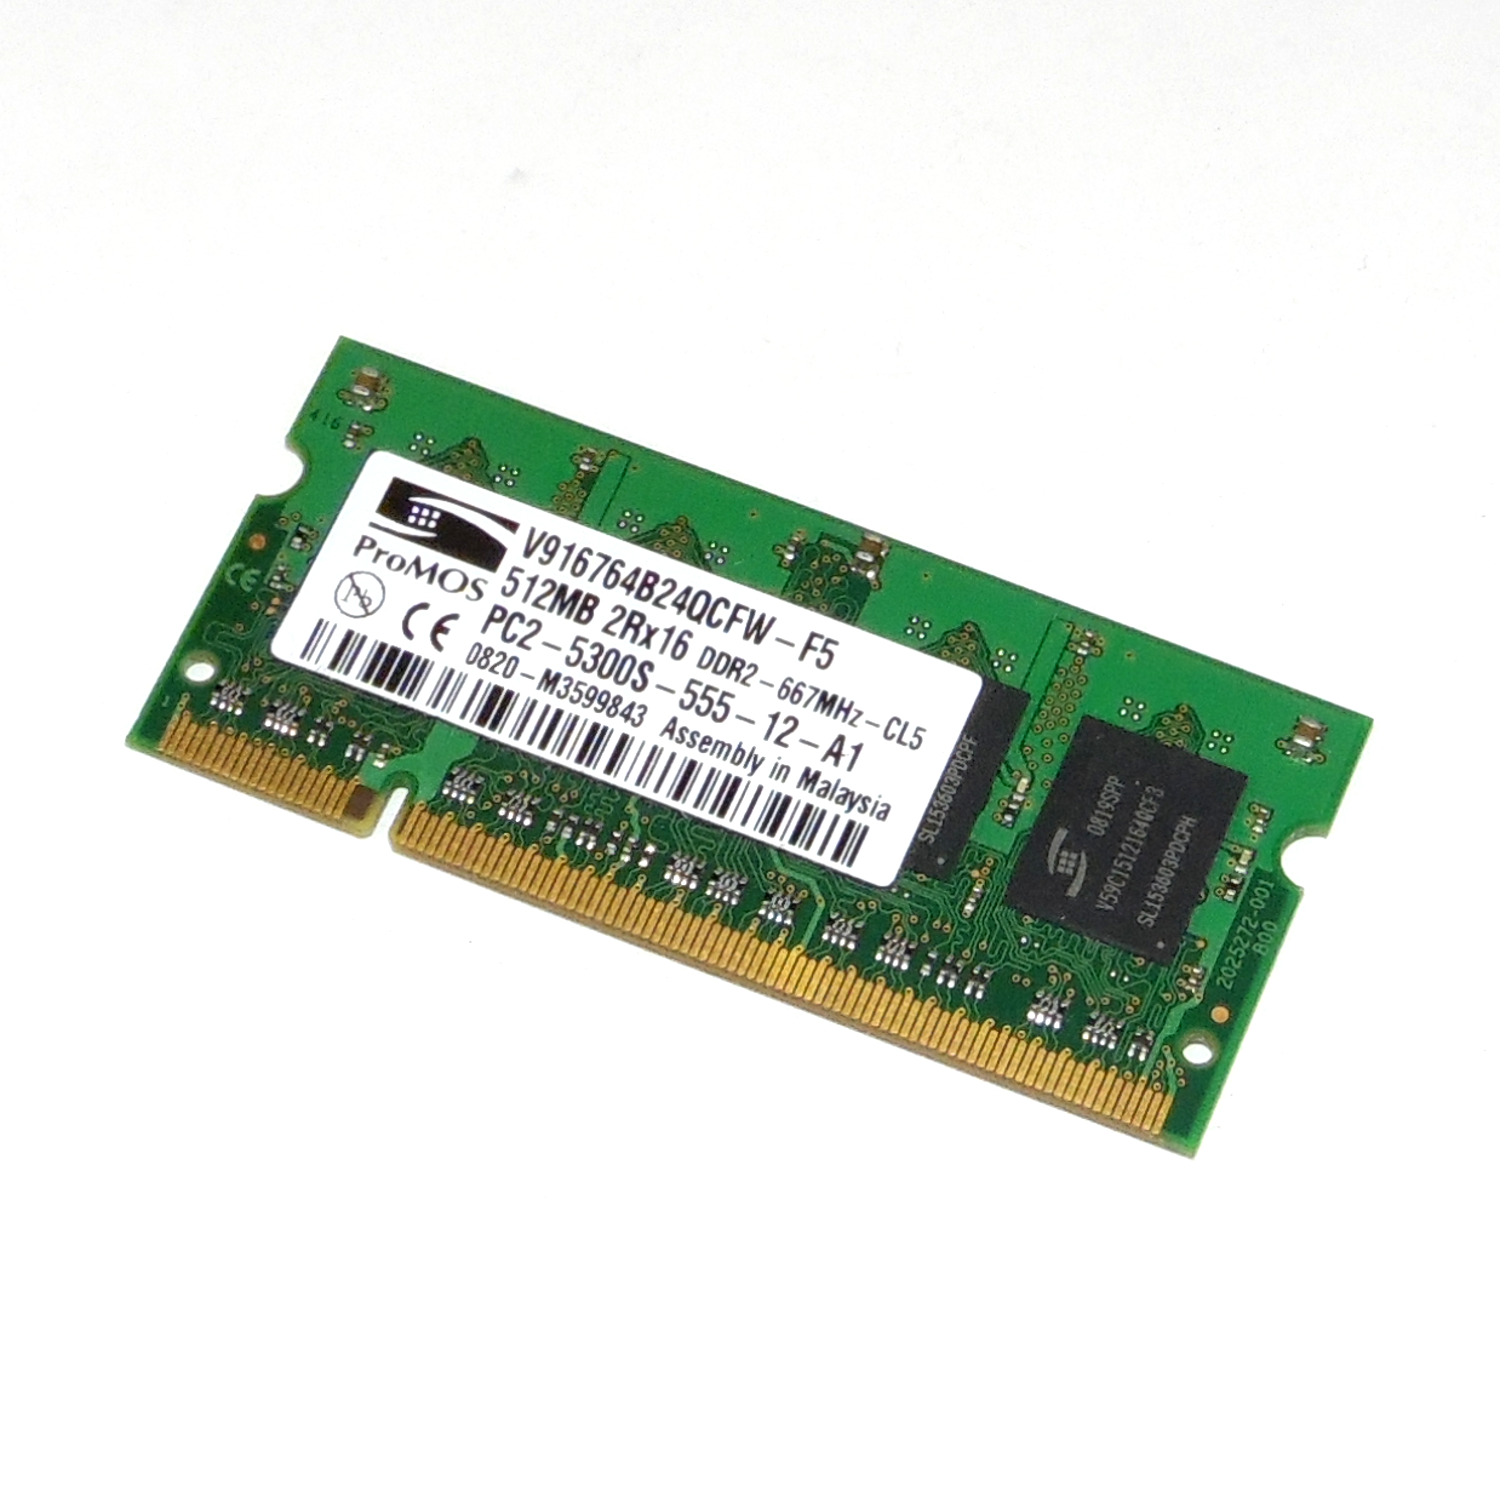 ProMOS - SO-DIMM - 512 MB - DDR2 - V916764B24QCFW-F5 - PC2 5300S - 667 Mhz